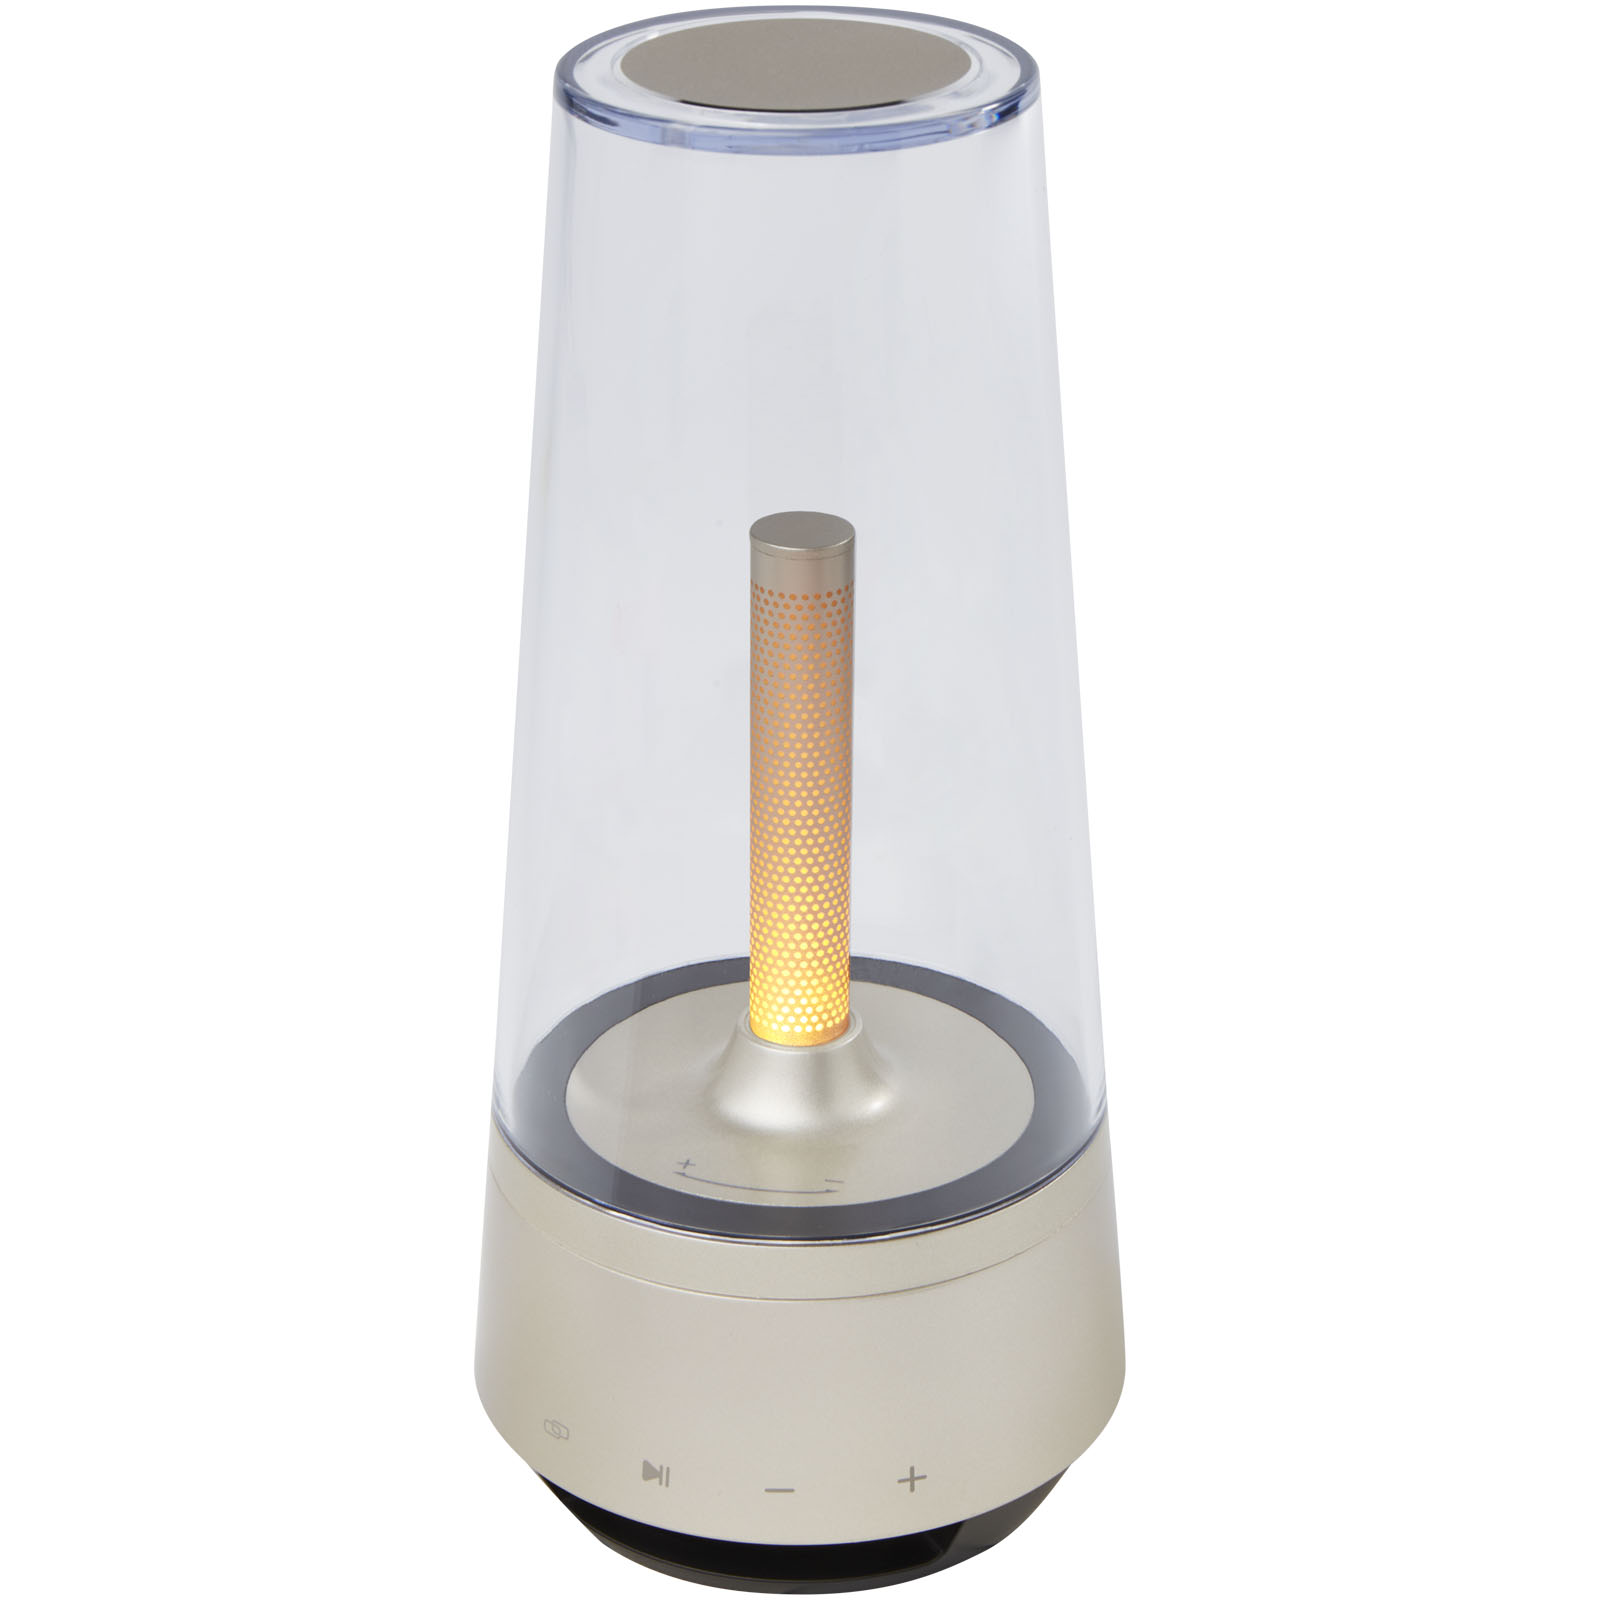 Altavoz Bluetooth Ambiance con regulador de luz de vela incorporado - Lanciego/Lantziego